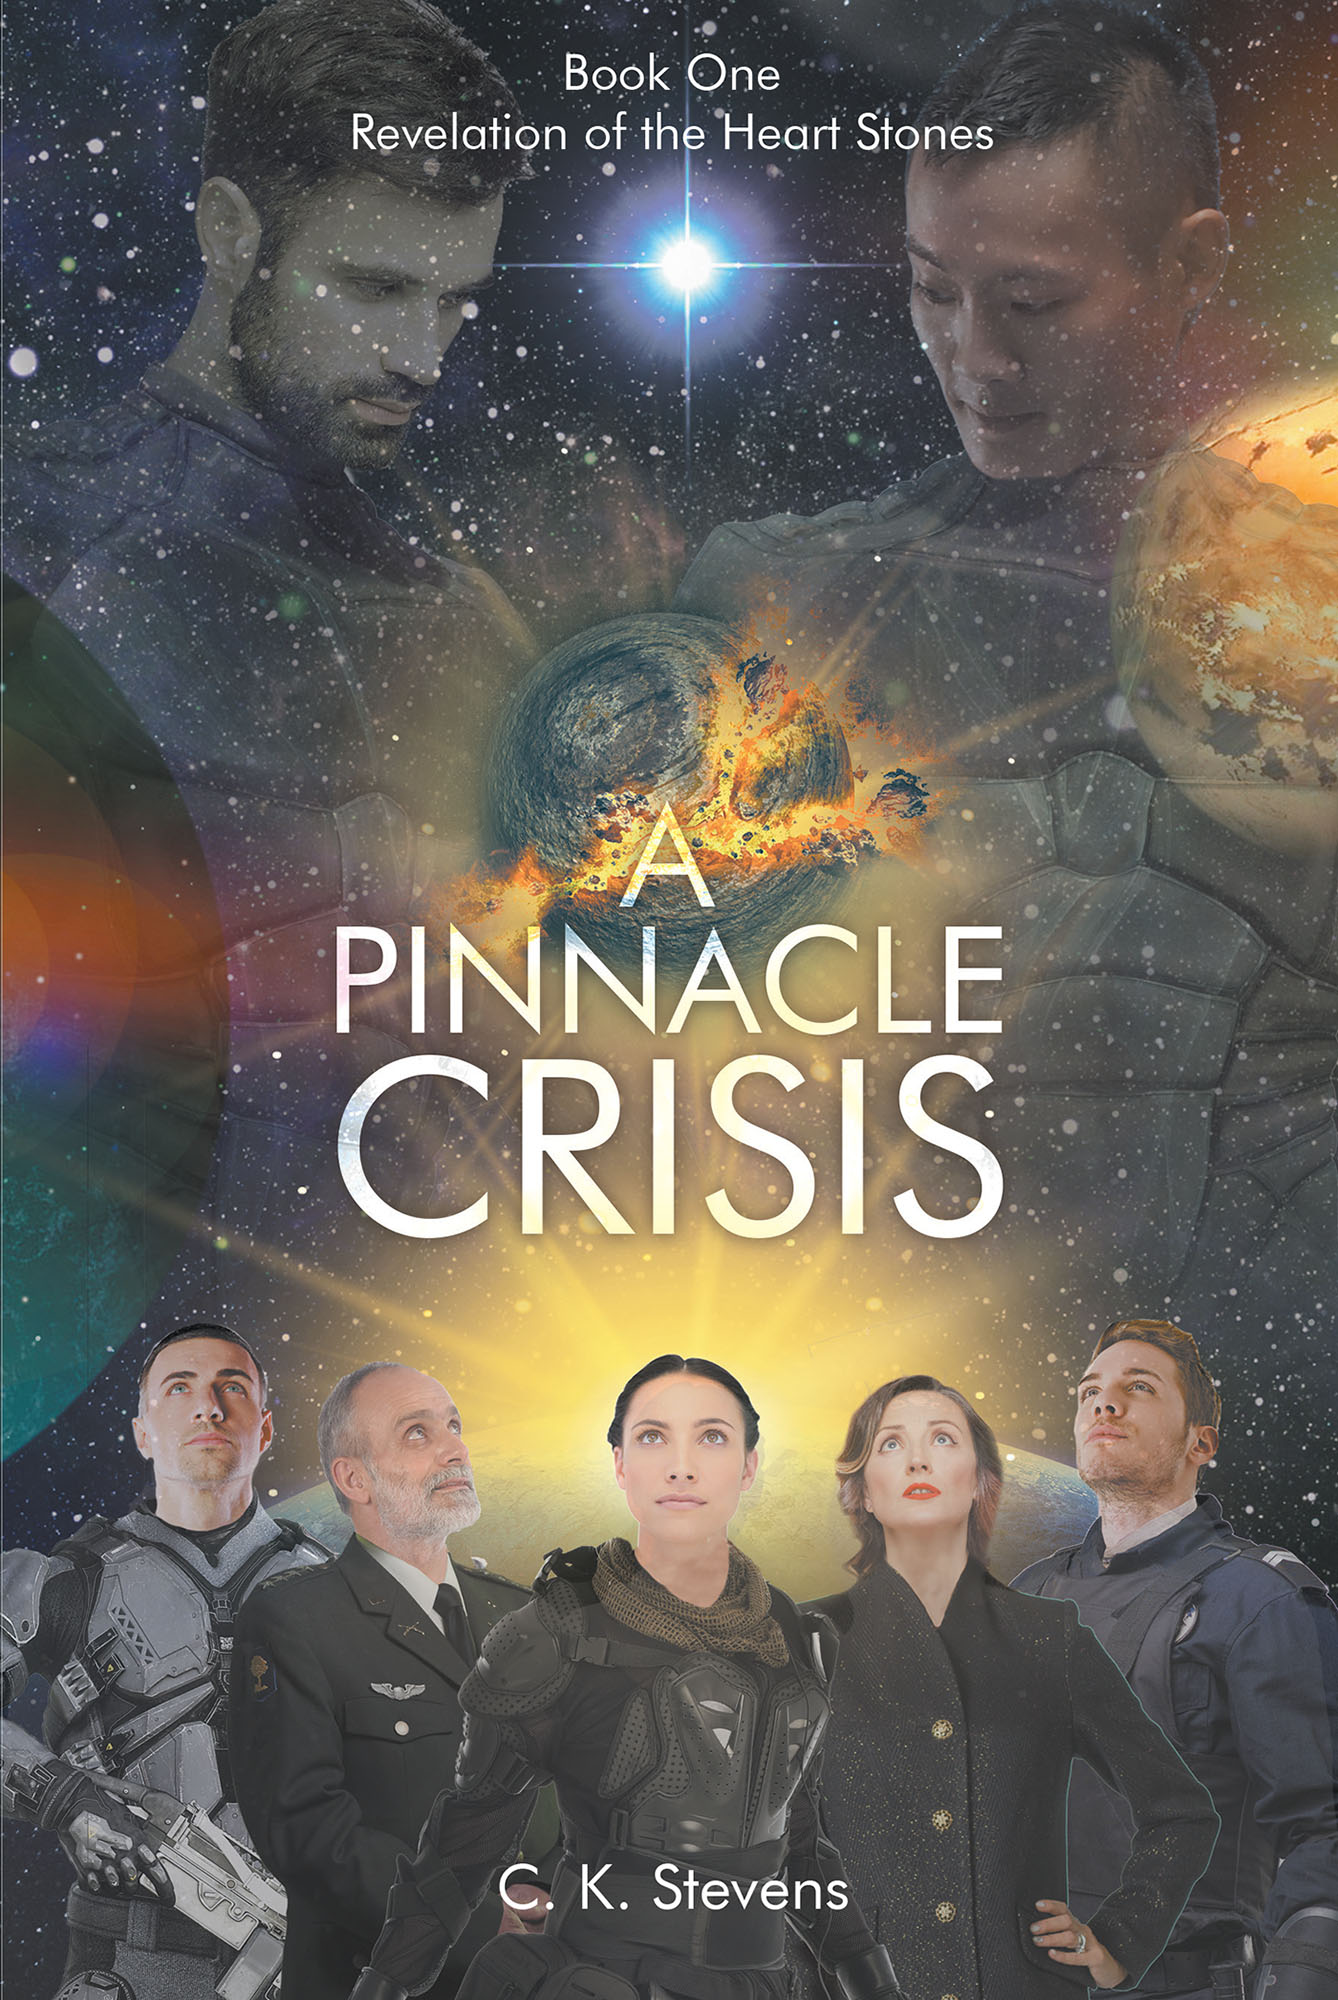  A Pinnacle Crisis  Cover Image